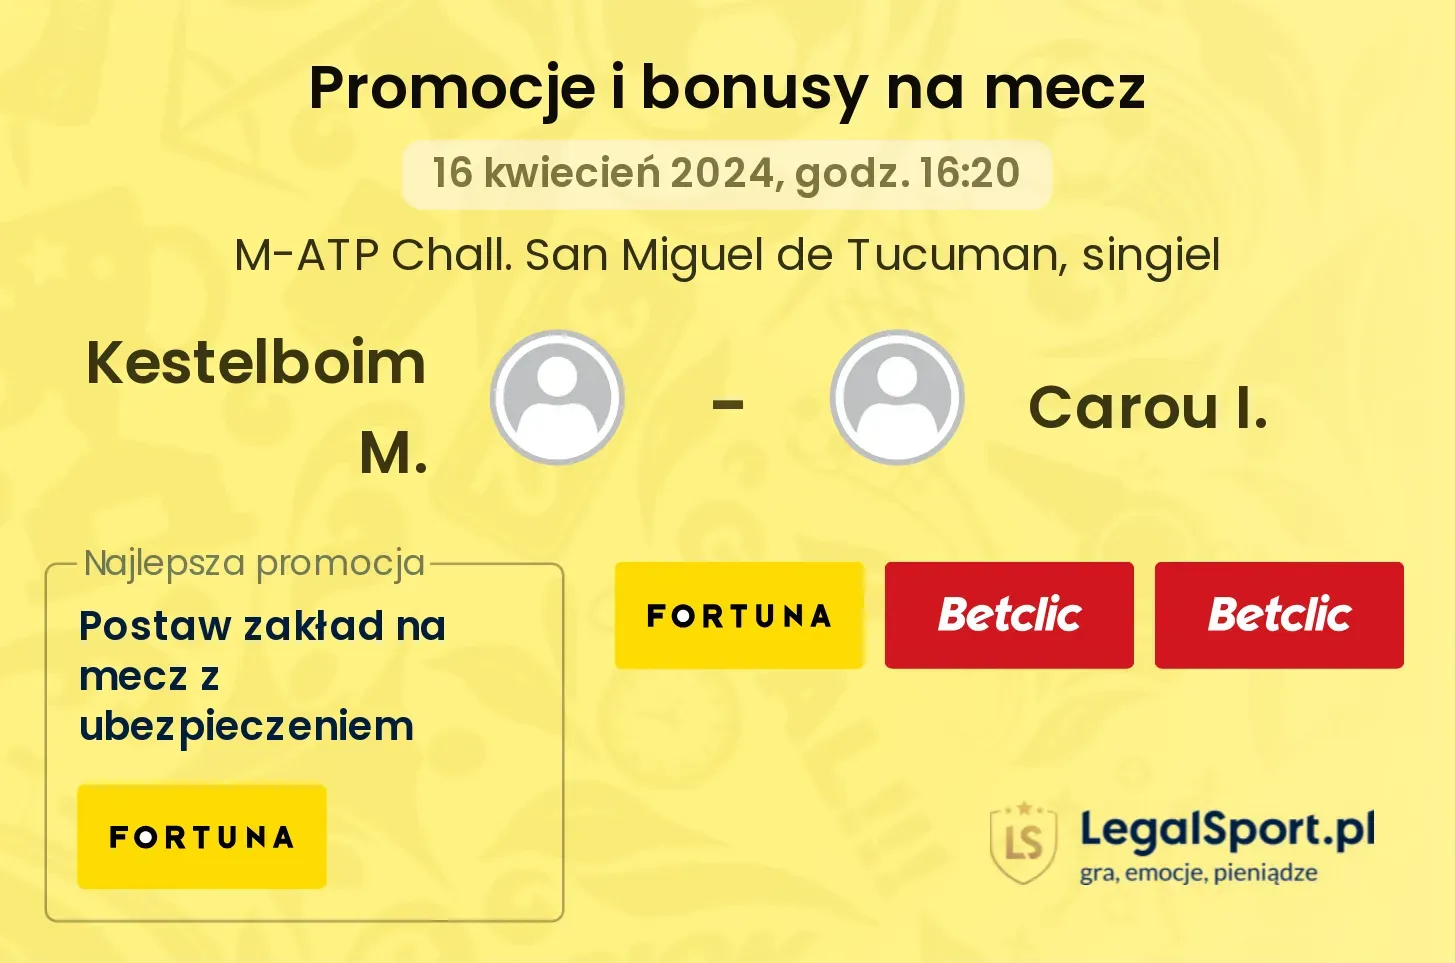 Kestelboim M. - Carou I. promocje bonusy na mecz